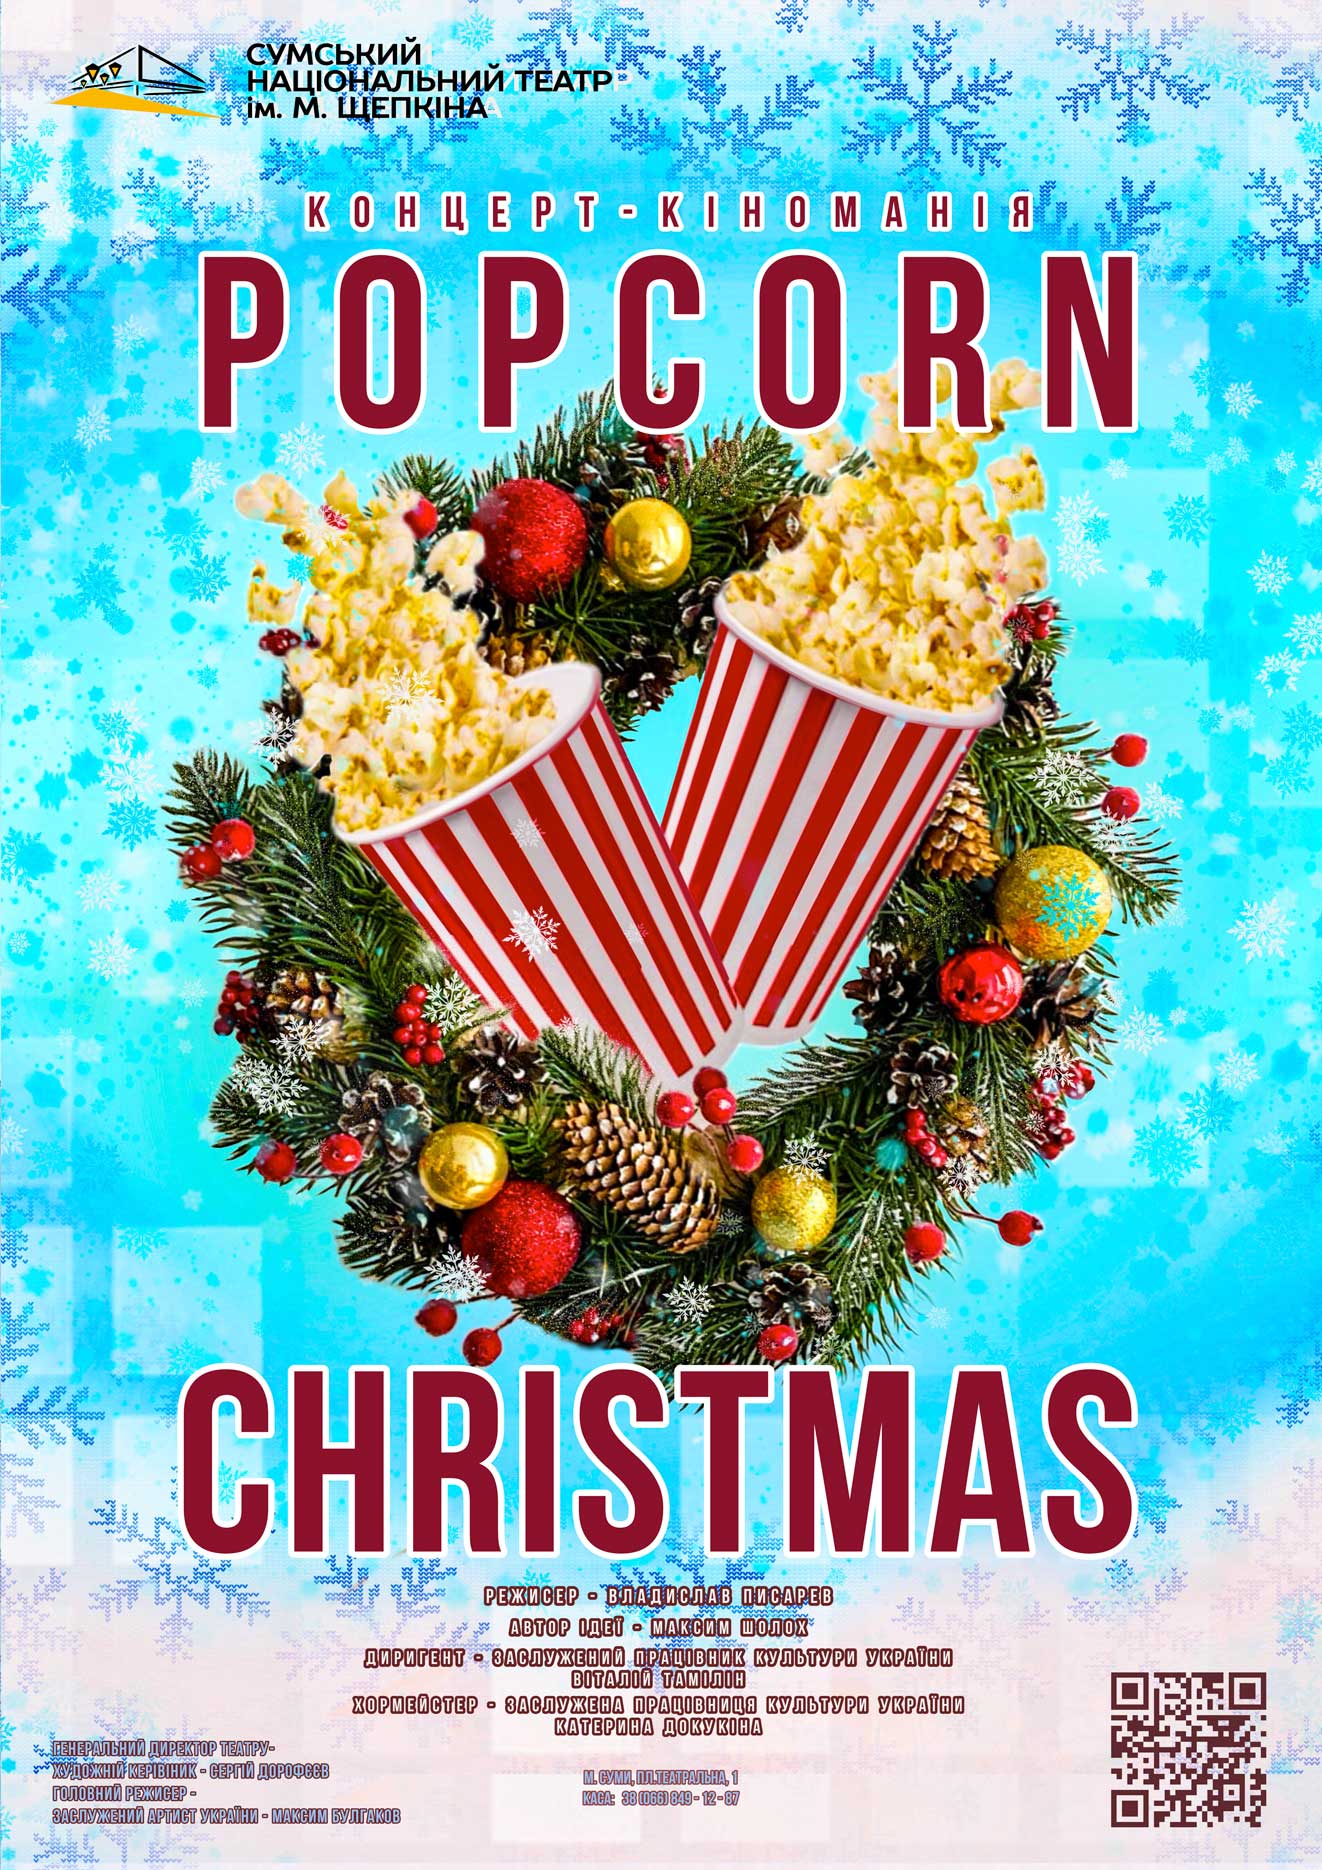 Popcorn Christmas